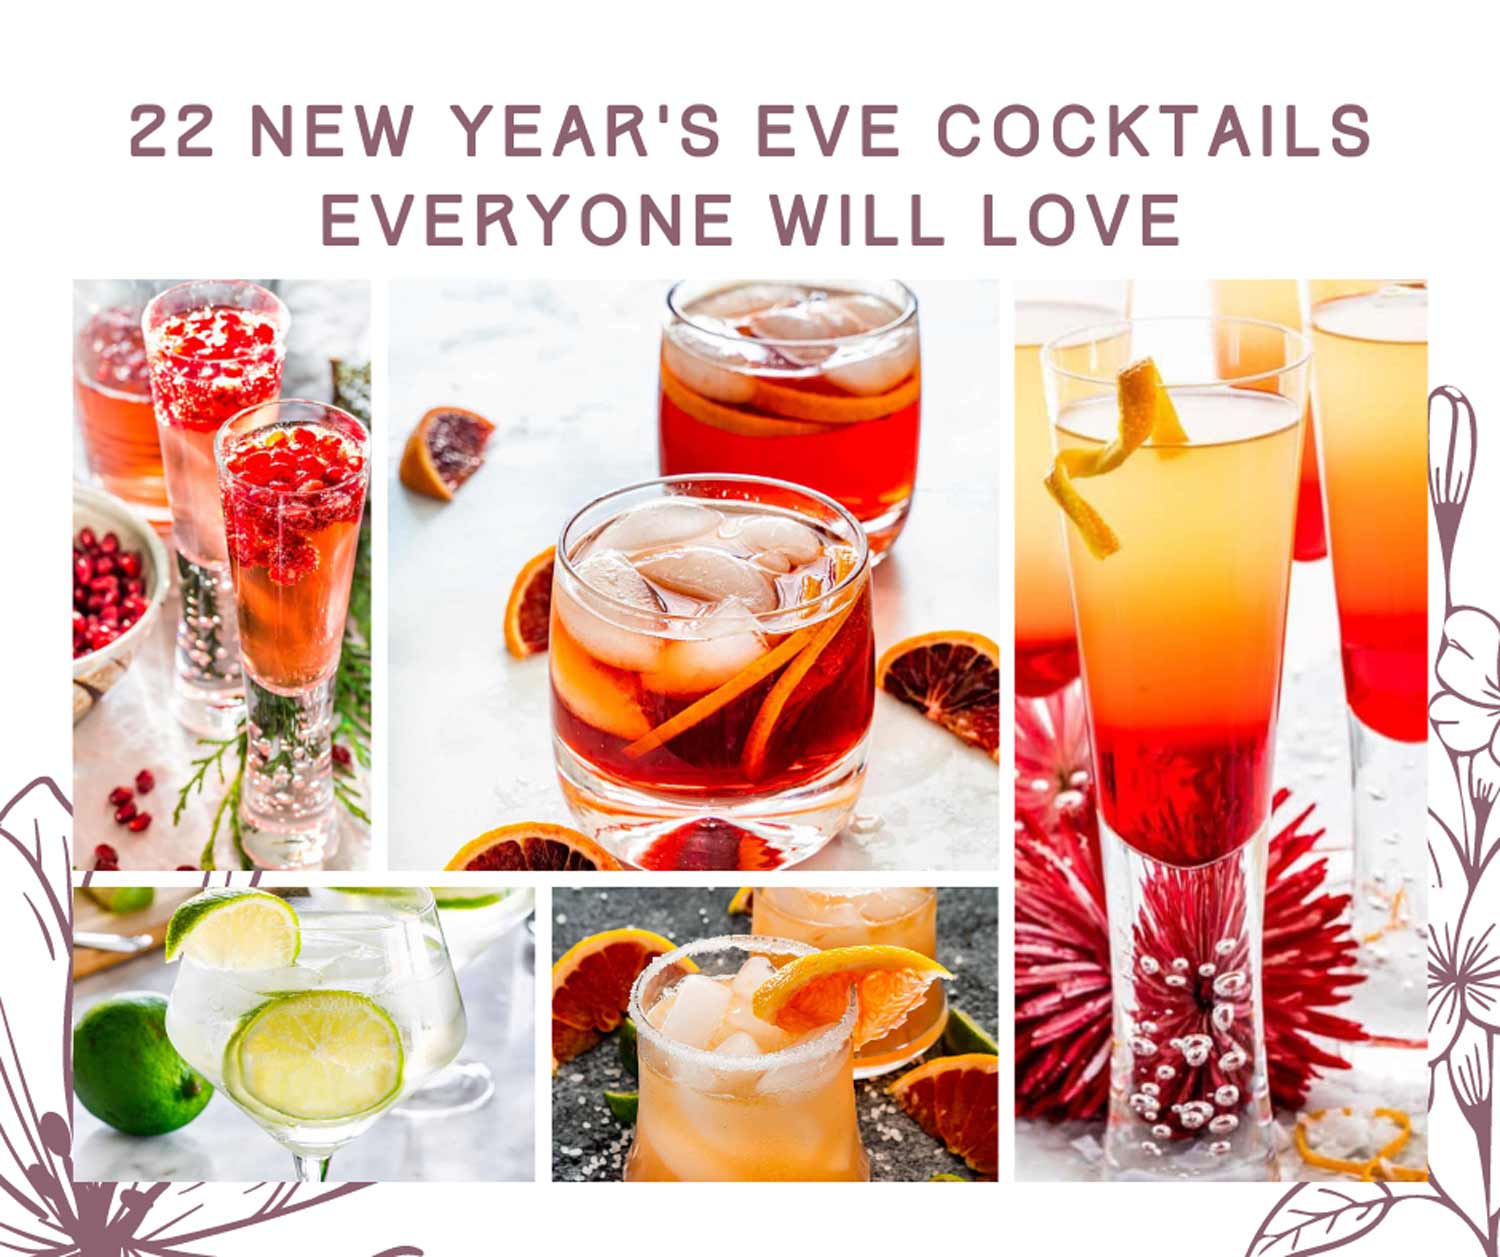 https://www.jocooks.com/wp-content/uploads/2022/12/2022-new-years-eve-cocktails.jpg